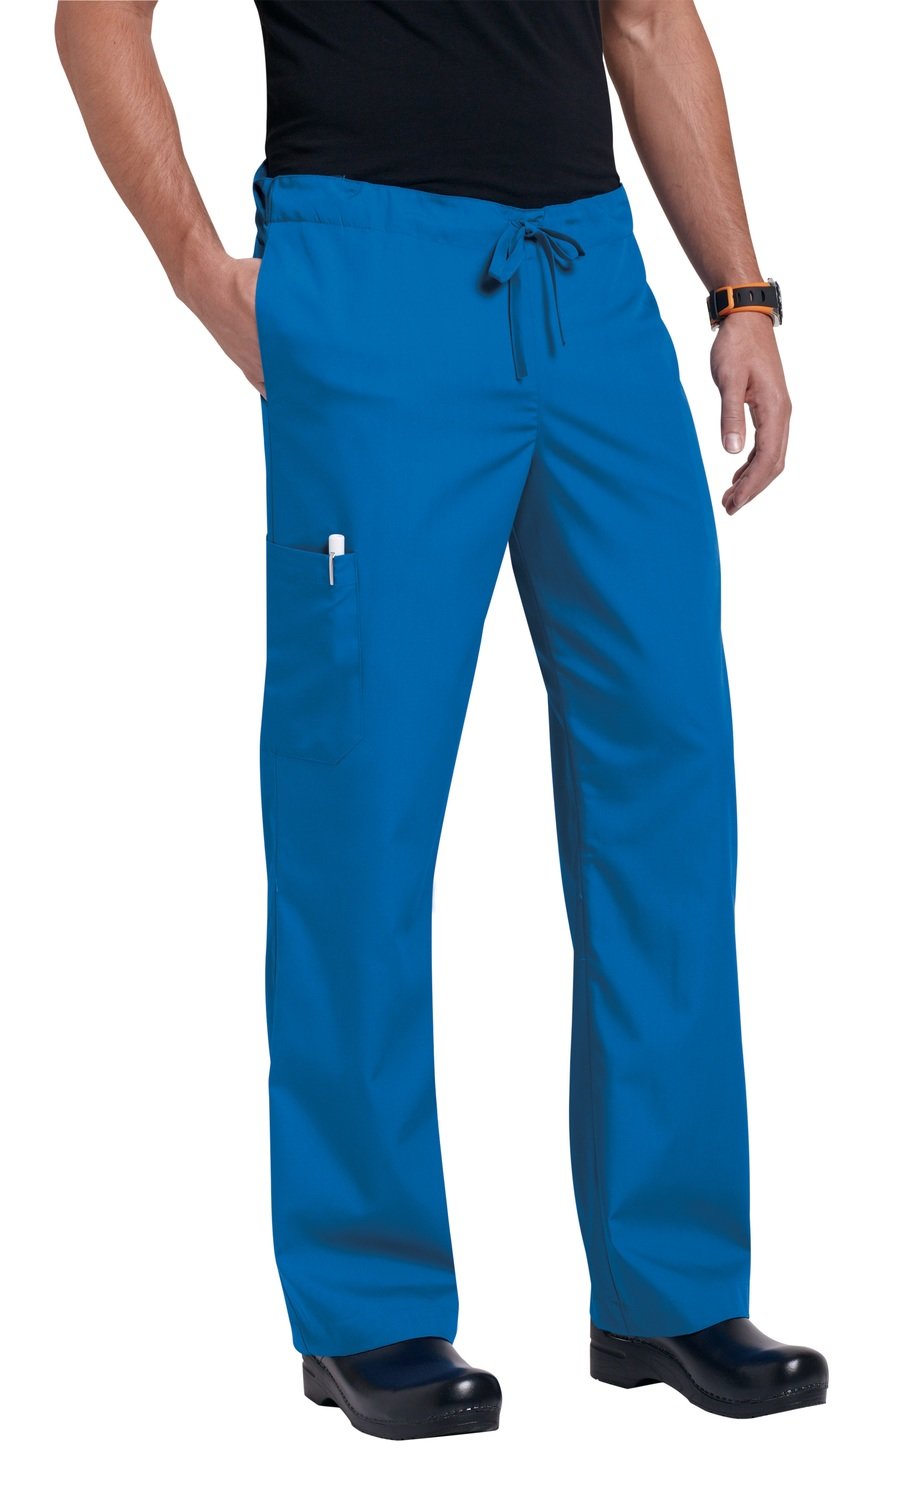 Pantalone Orange HUNTINGTON Unisex Colore 20. Royal Blue